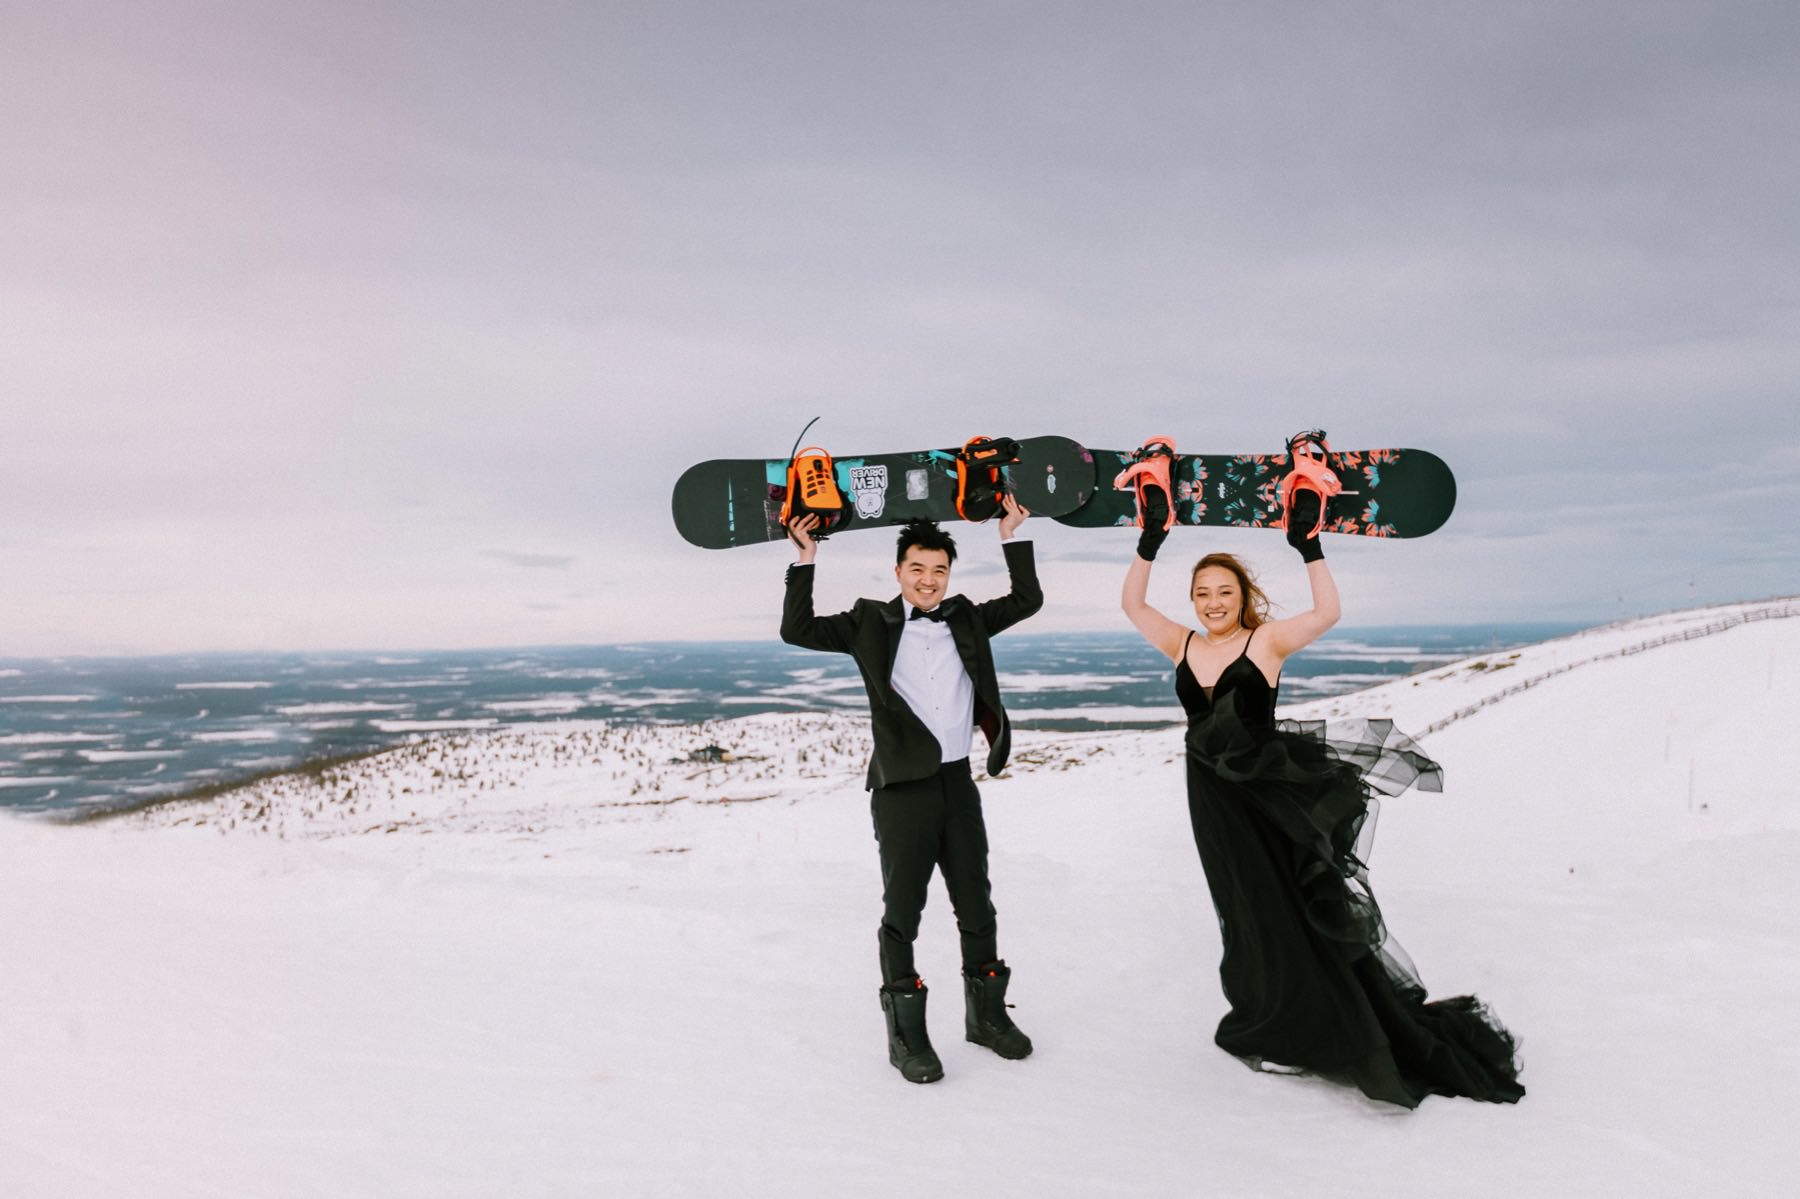 snowboarding in Lapland Finland